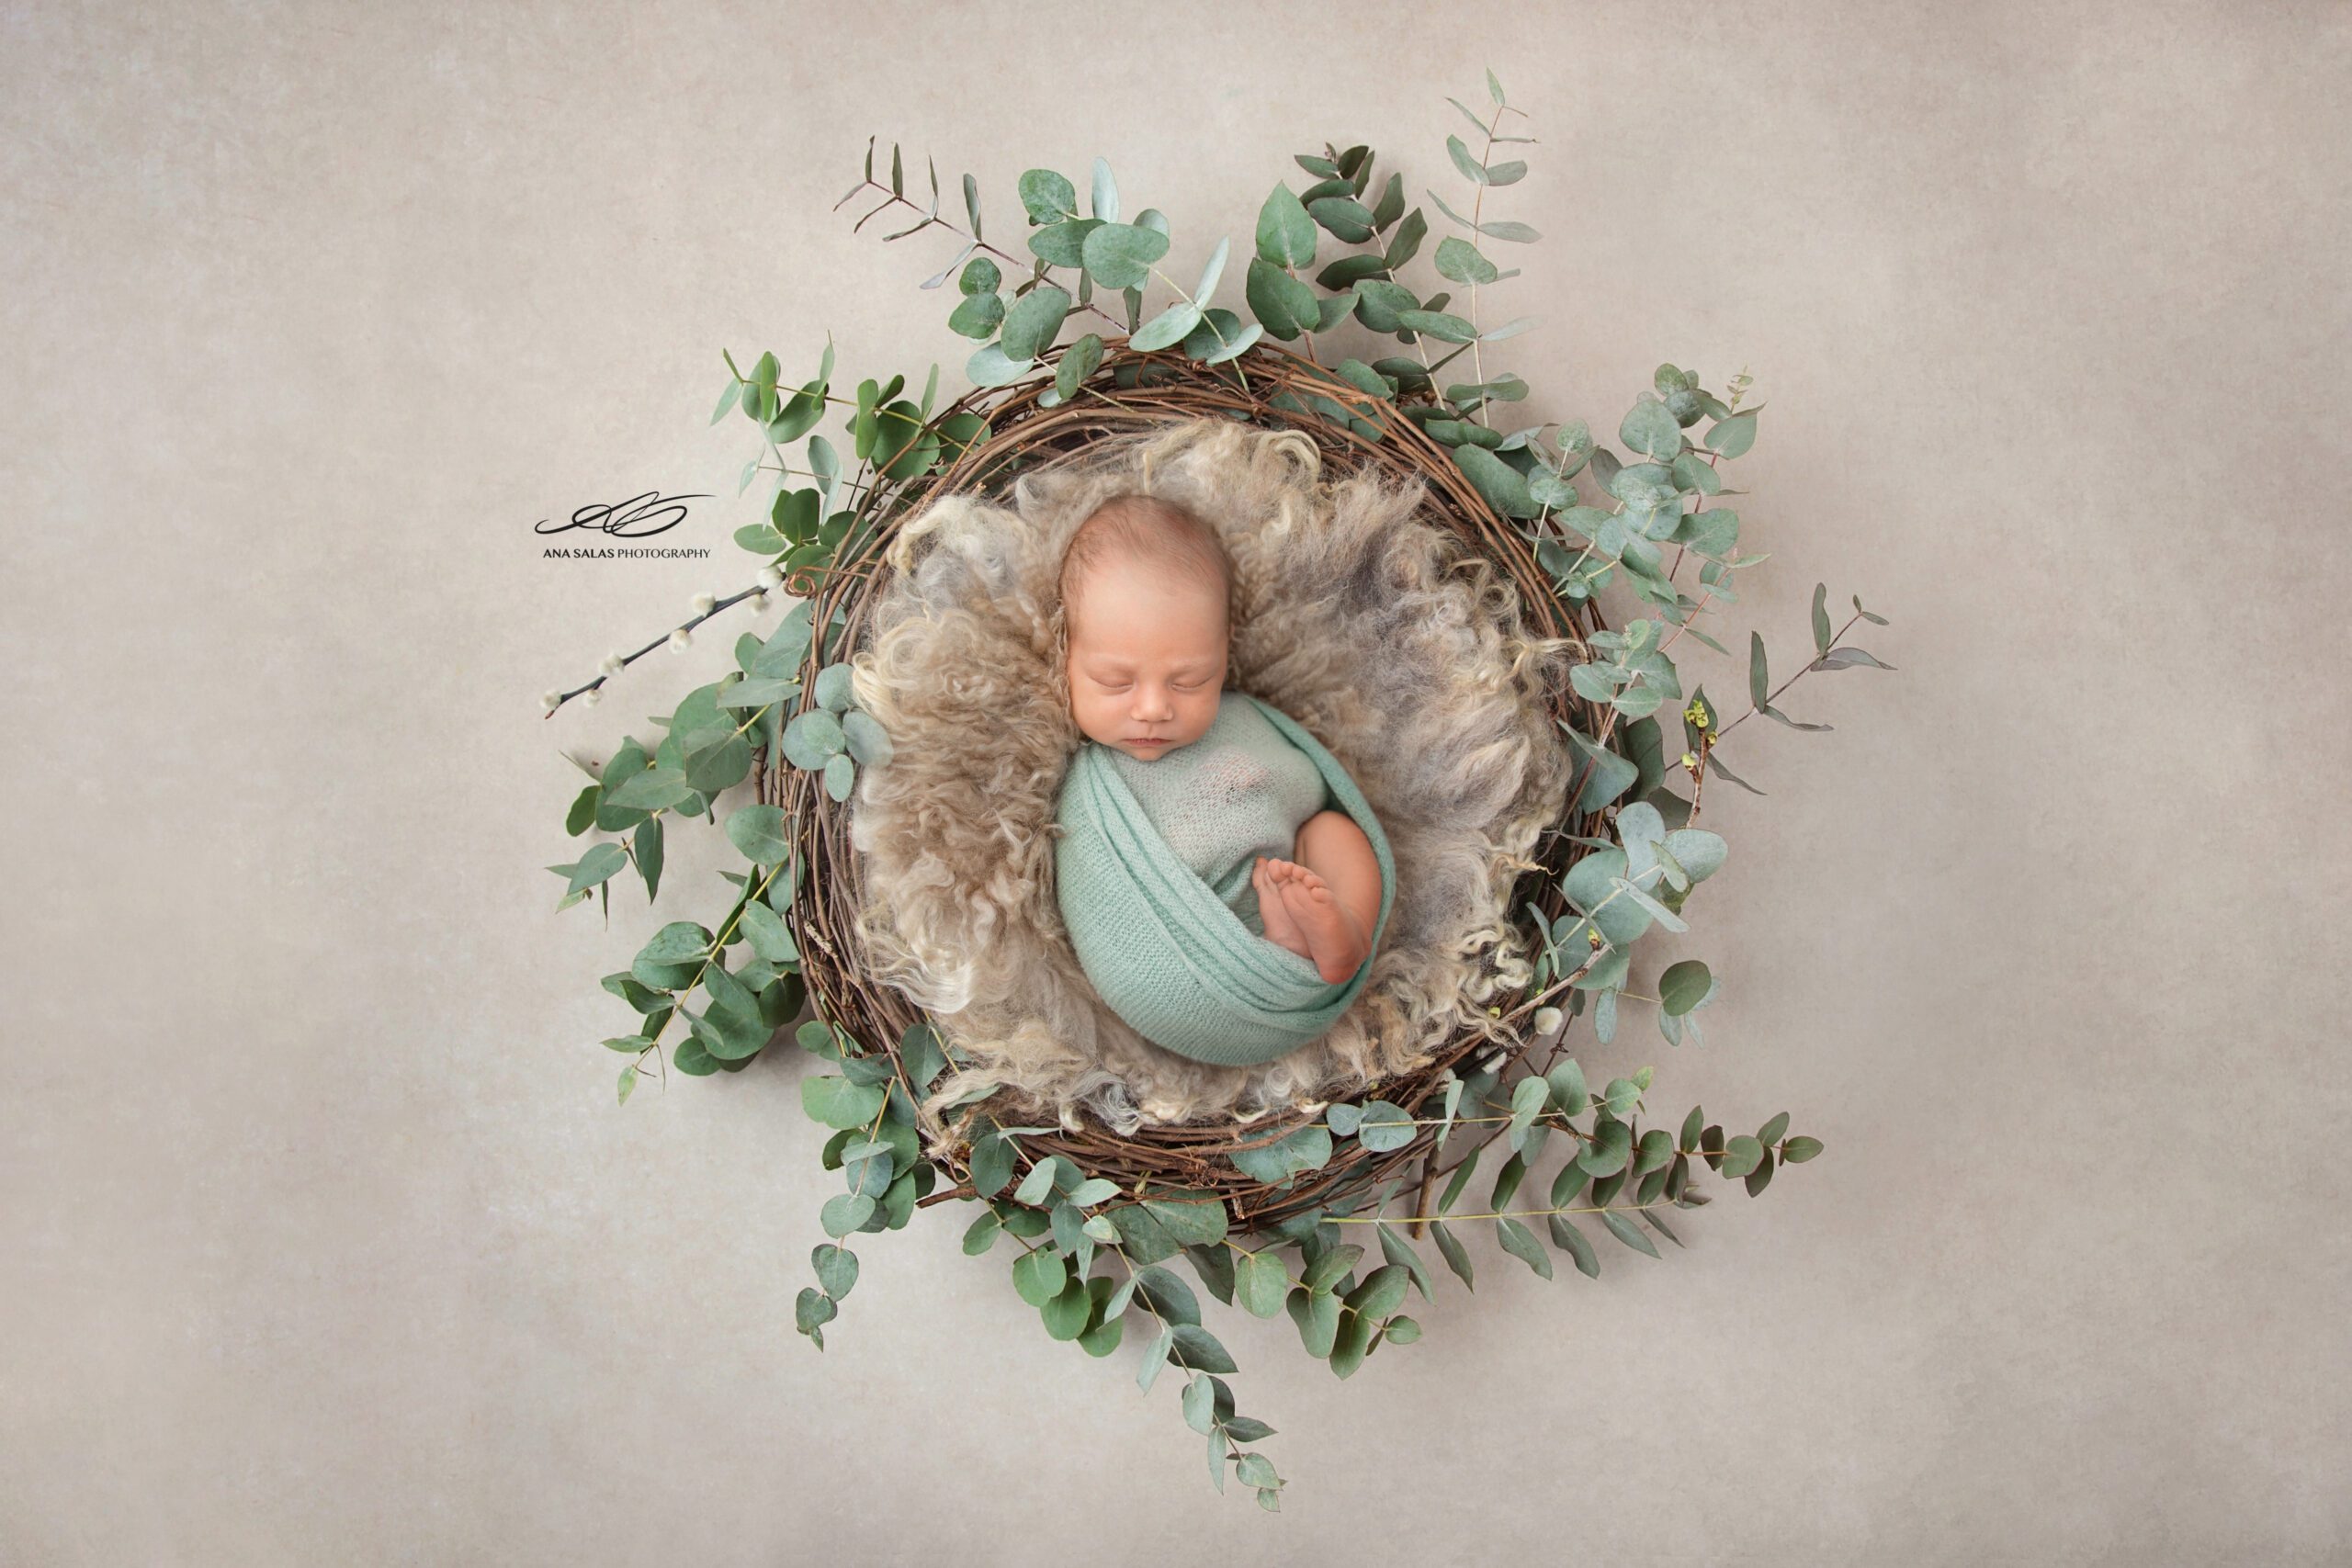 Edmonton newborn photographer. Baby boy photoshoot. Greenery design. Wrapped baby